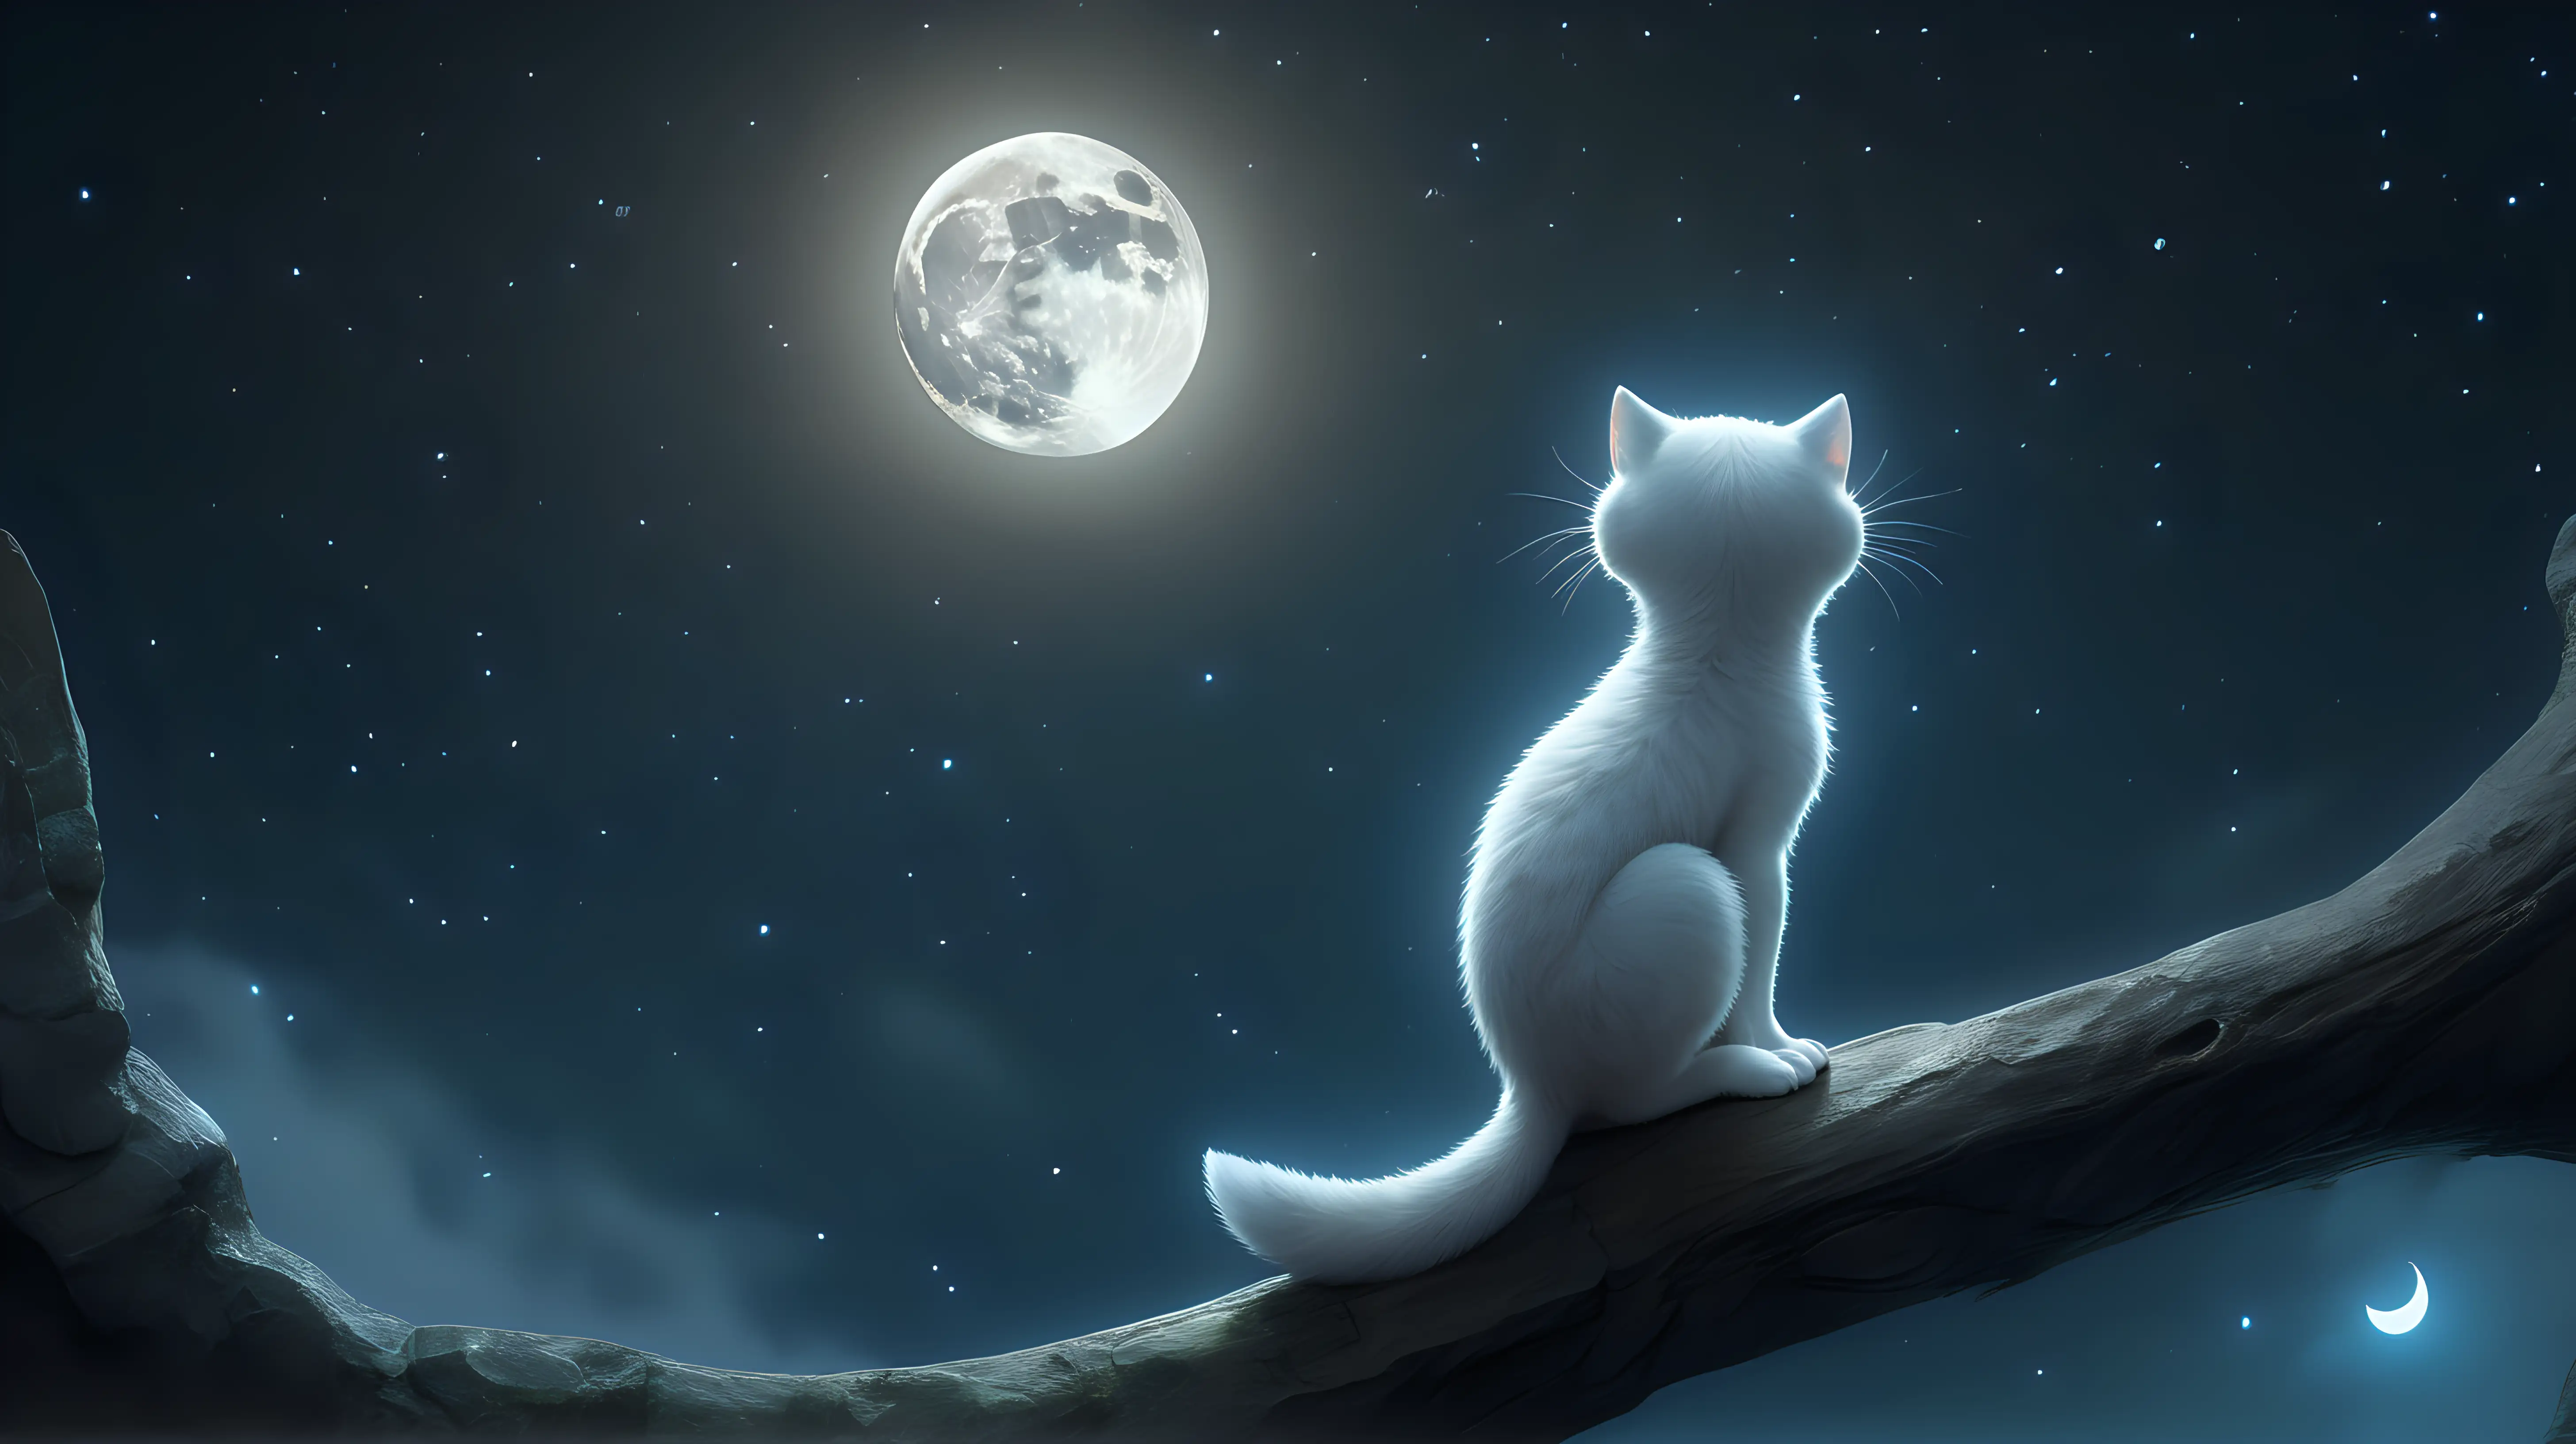 Enchanted Creature Gazing at Shimmering Full Moon